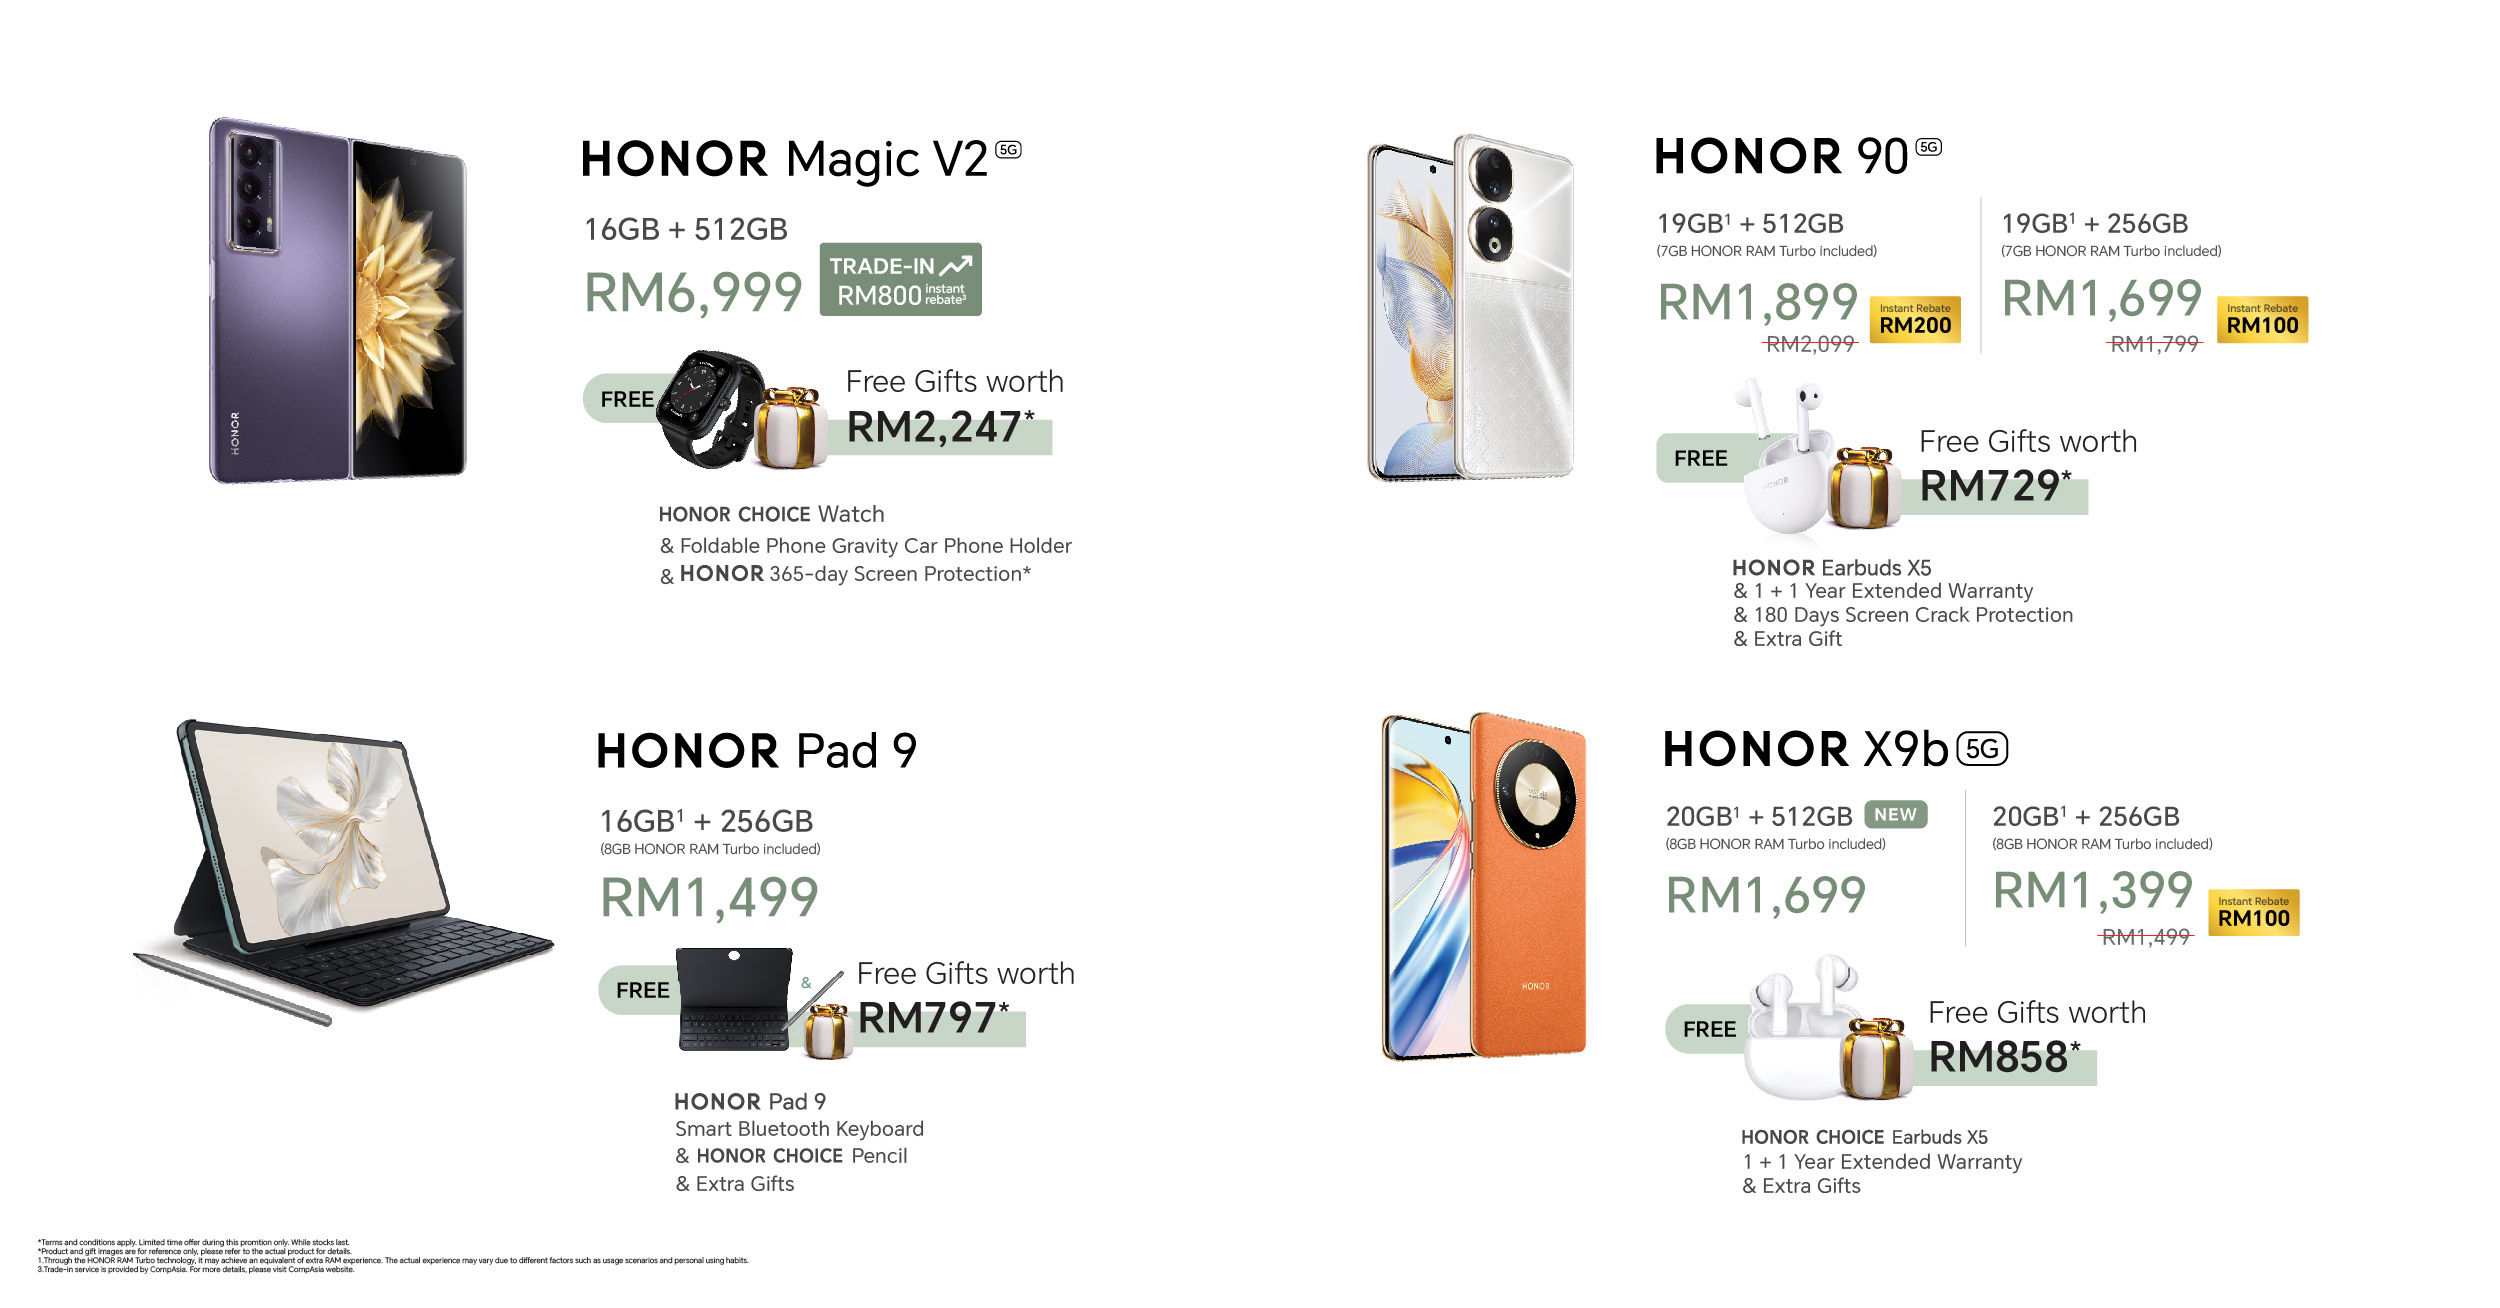 HONOR Magic6 Pro路演开跑！总值RM 649,000 礼品待赢取！